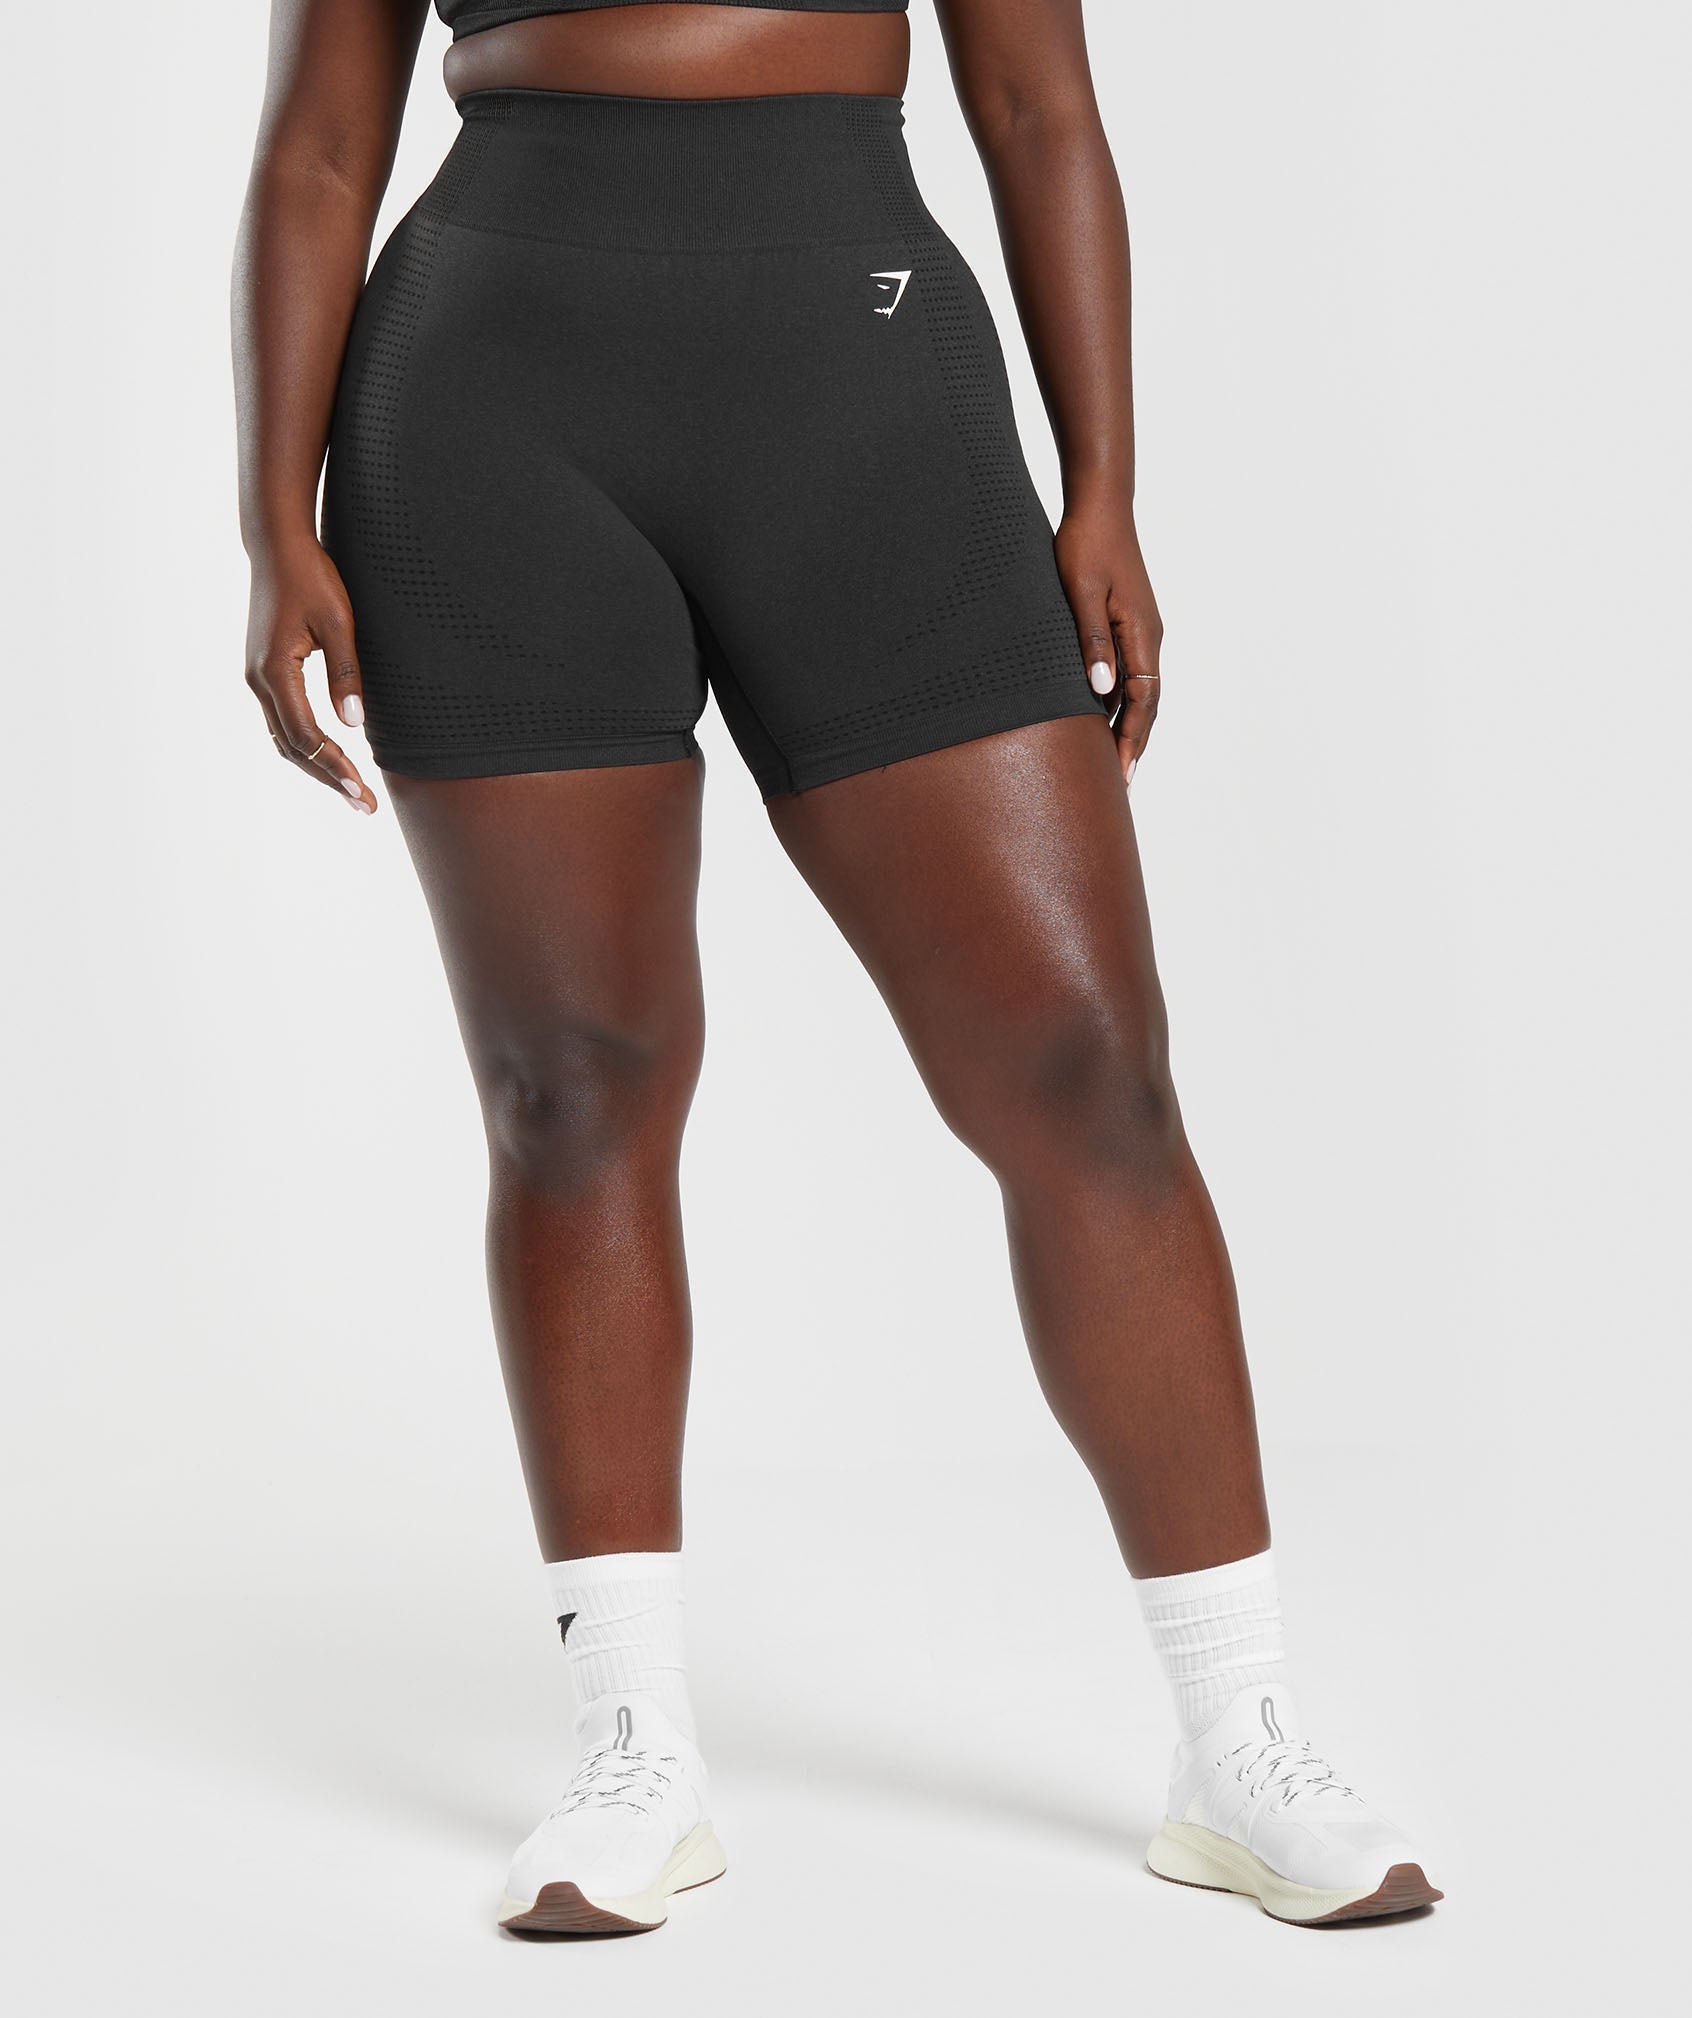 2021 Women Hot Йога Set 2 Piece Vital Seamless Sport Suit Gym